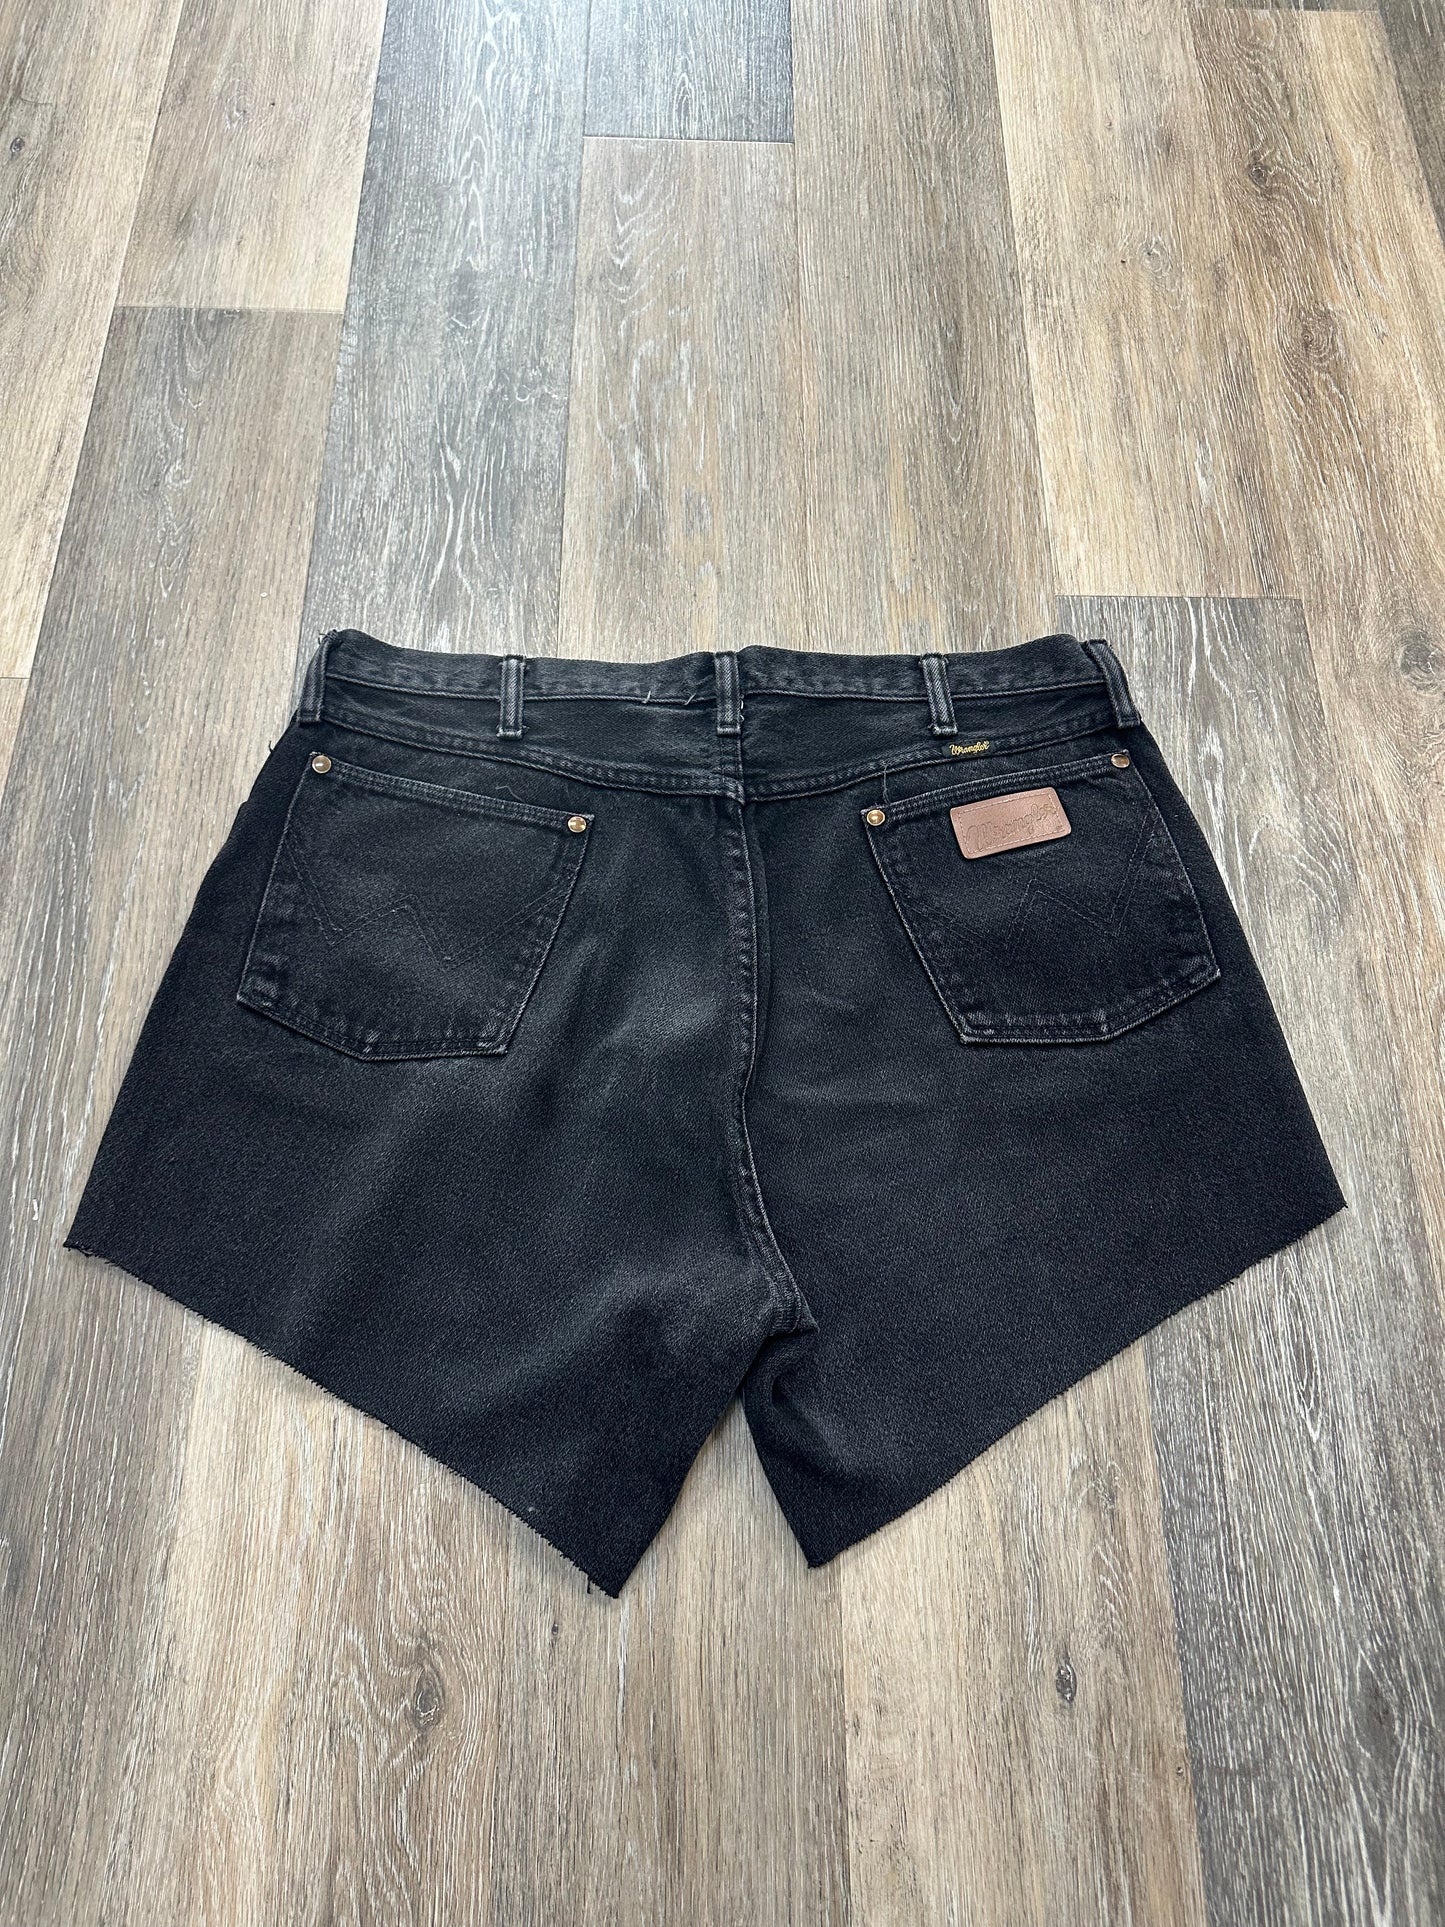 Black Denim Shorts Wrangler, Size 20